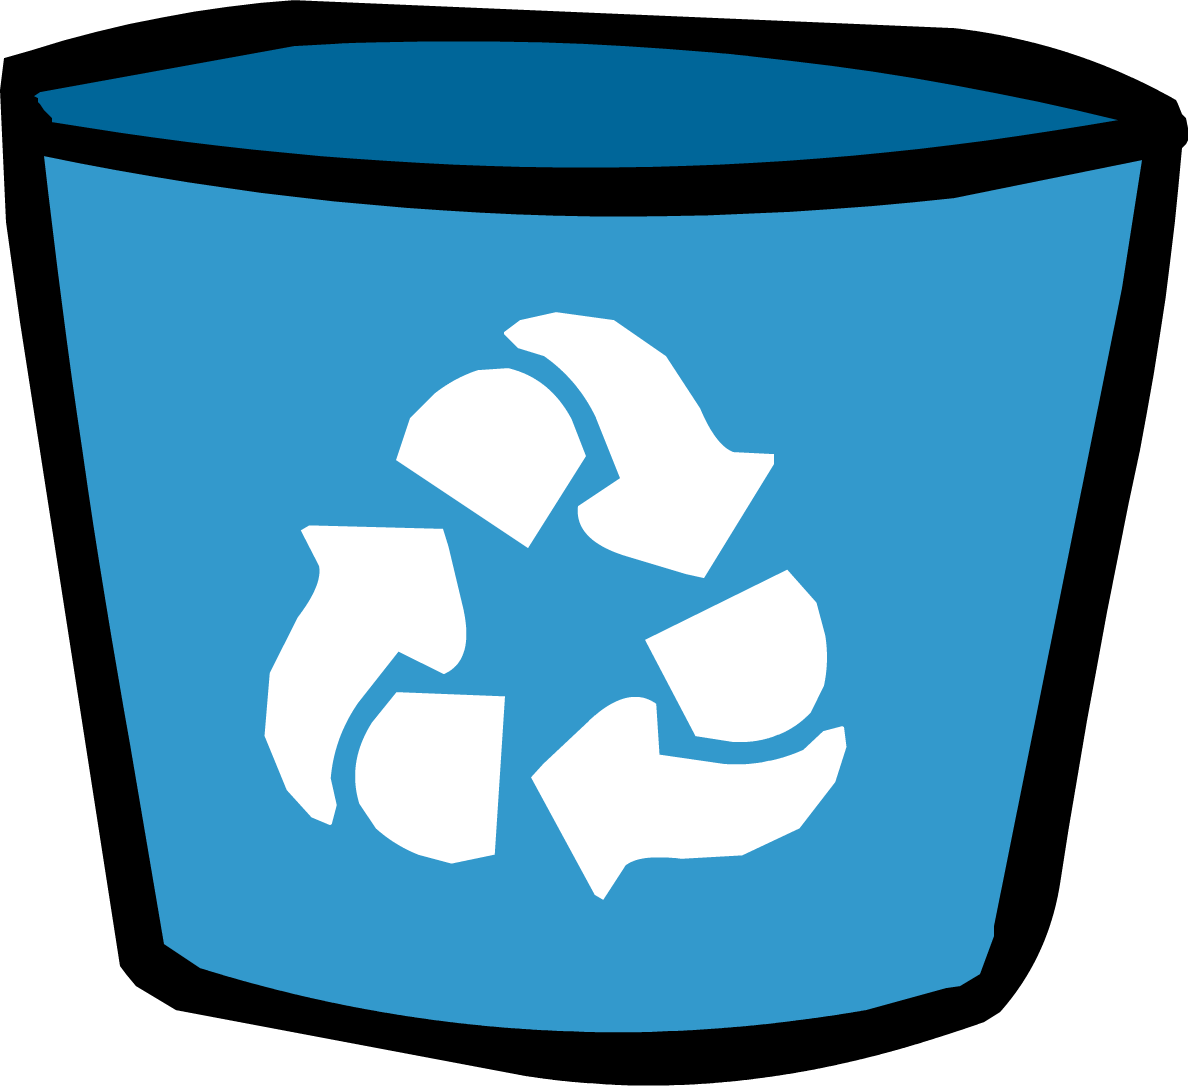 Recycle Bin Trash PNG Pic